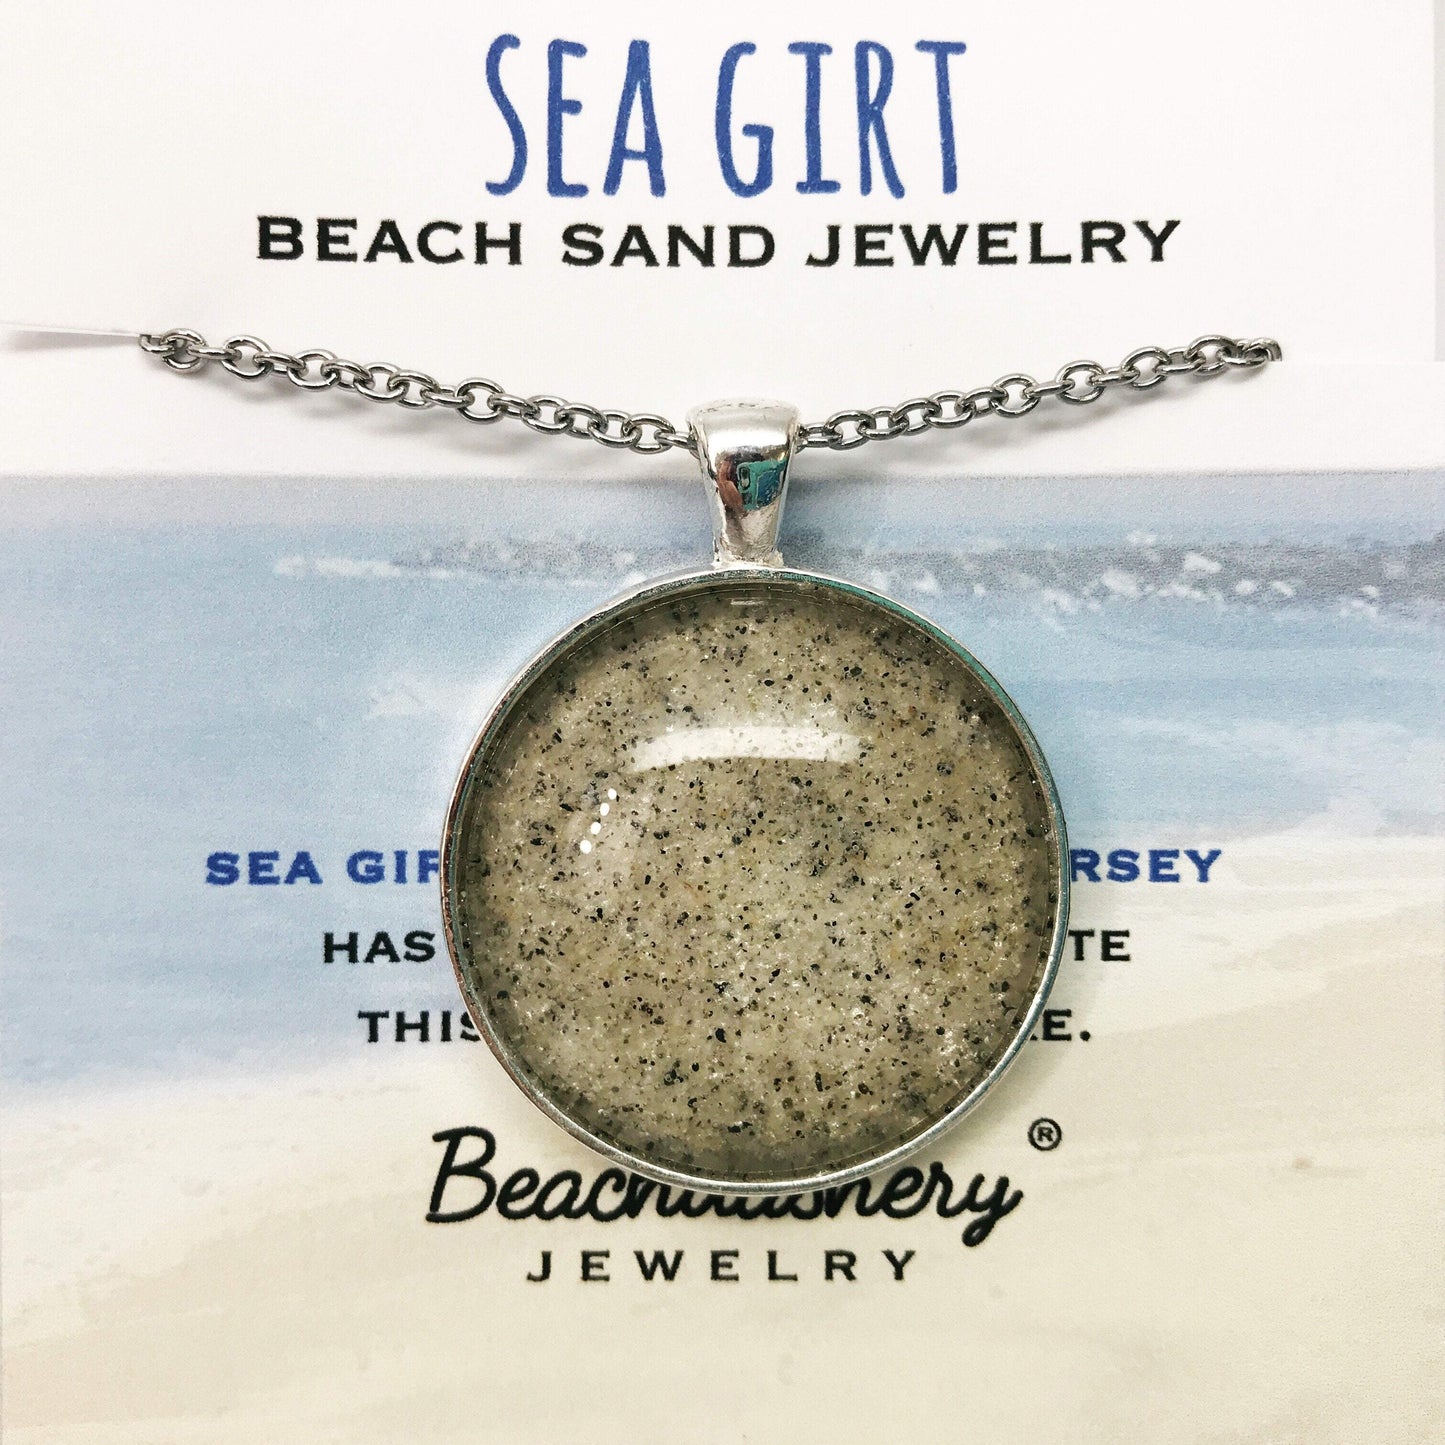 Load image into Gallery viewer, Sea Girt Beach New Jersey Sand Jewelry Beachdashery
